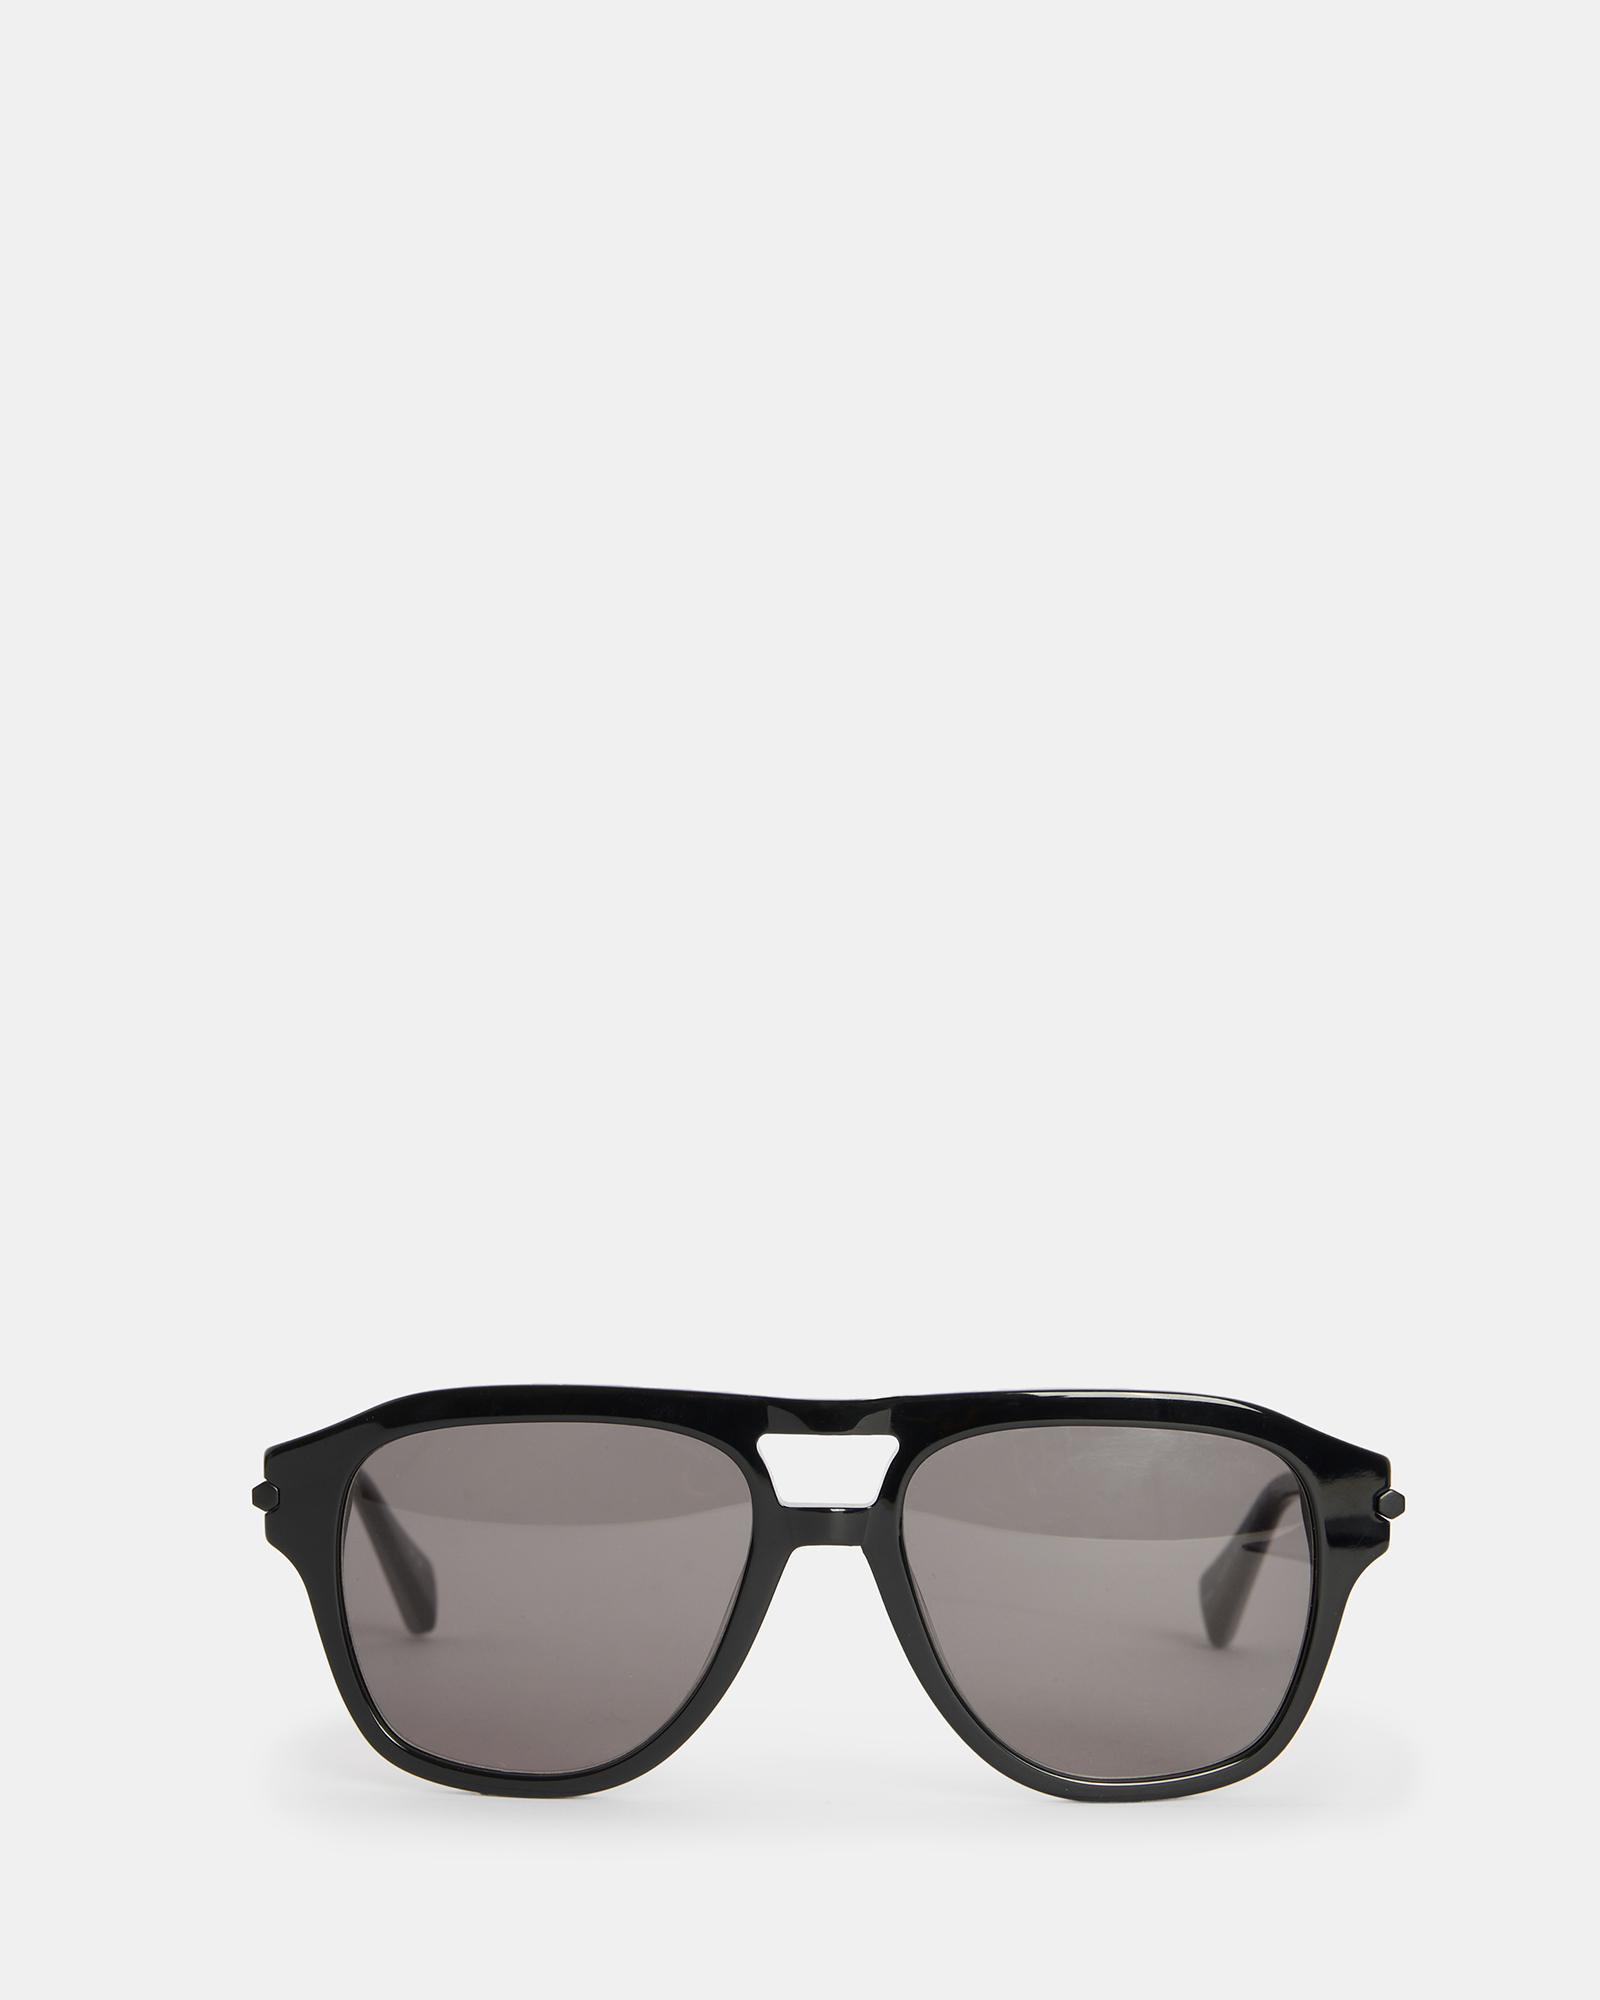 AllSaints Blaze Navigator Sunglasses,, Black, Size: One Size